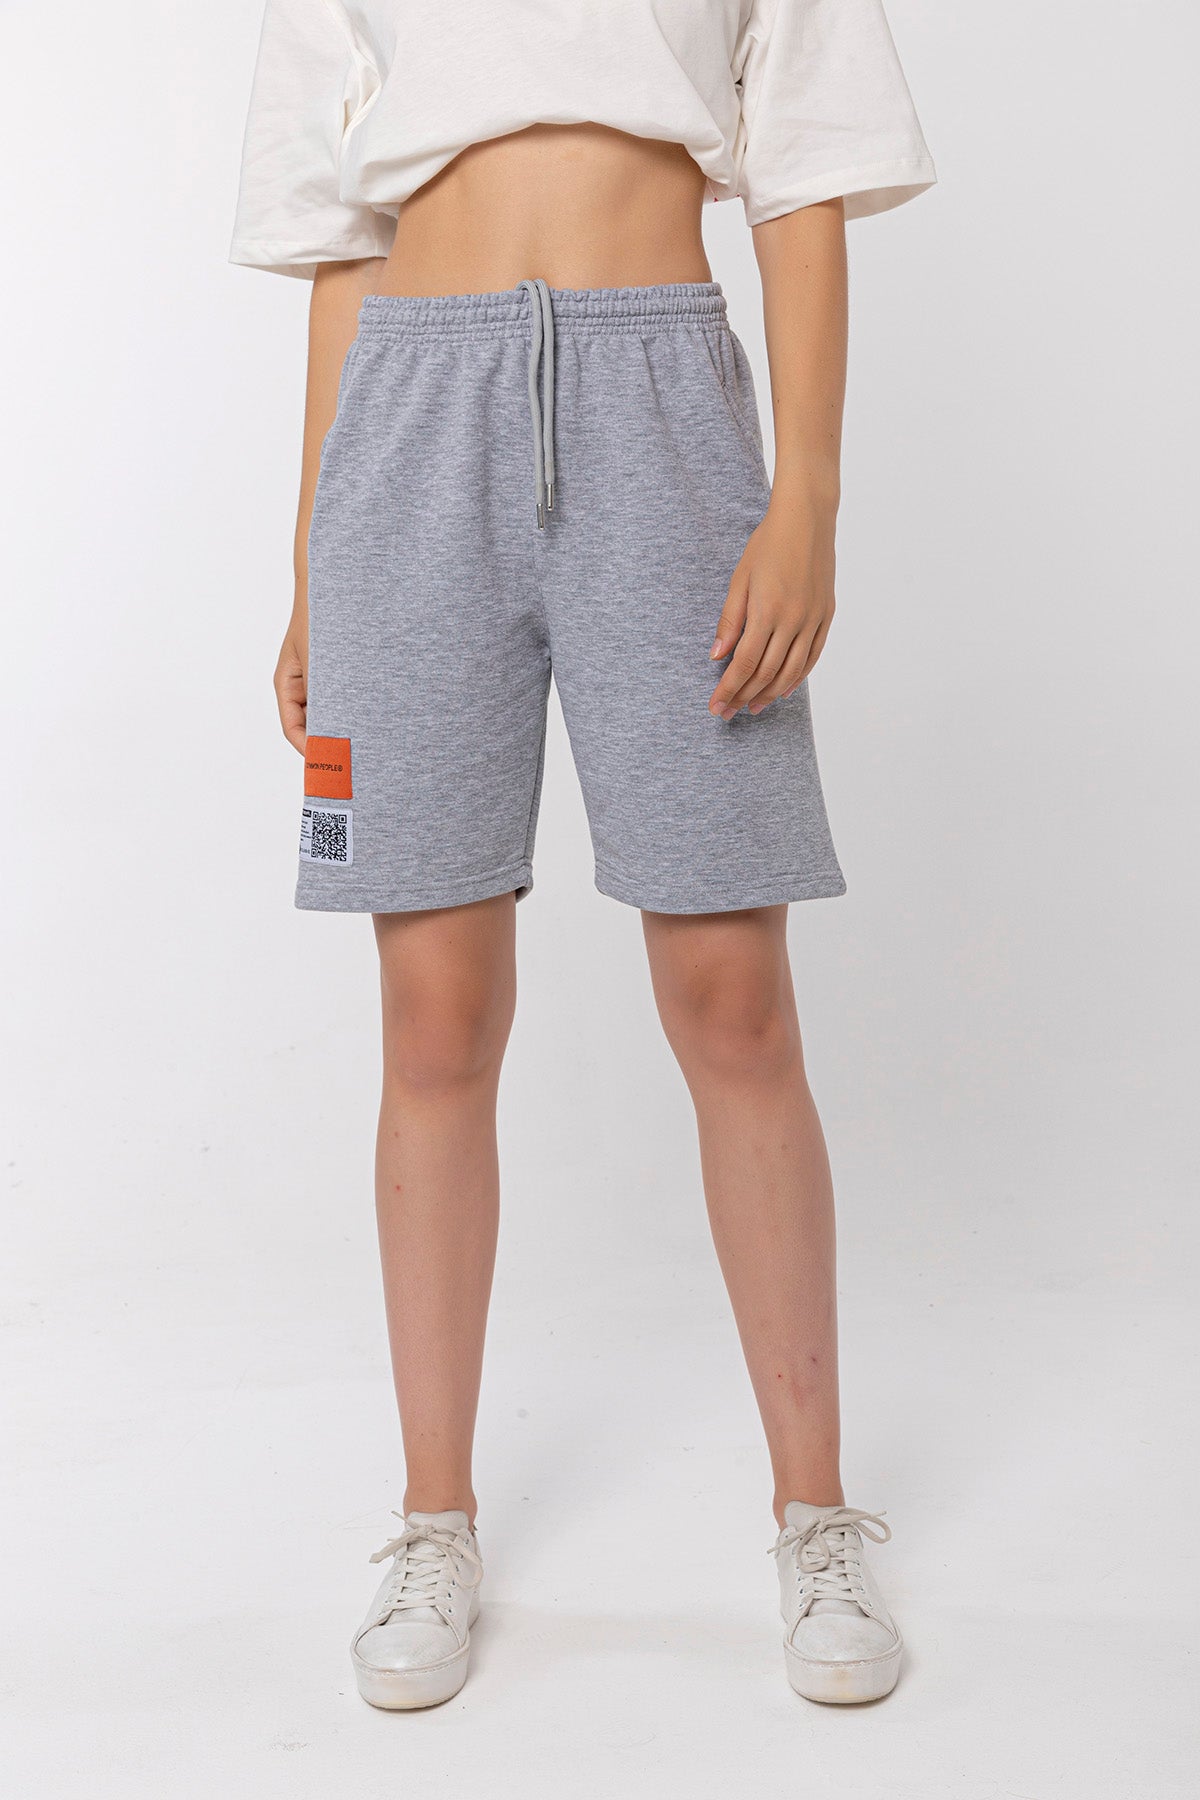 Unisex Shorts in Gray Melange with Lycra